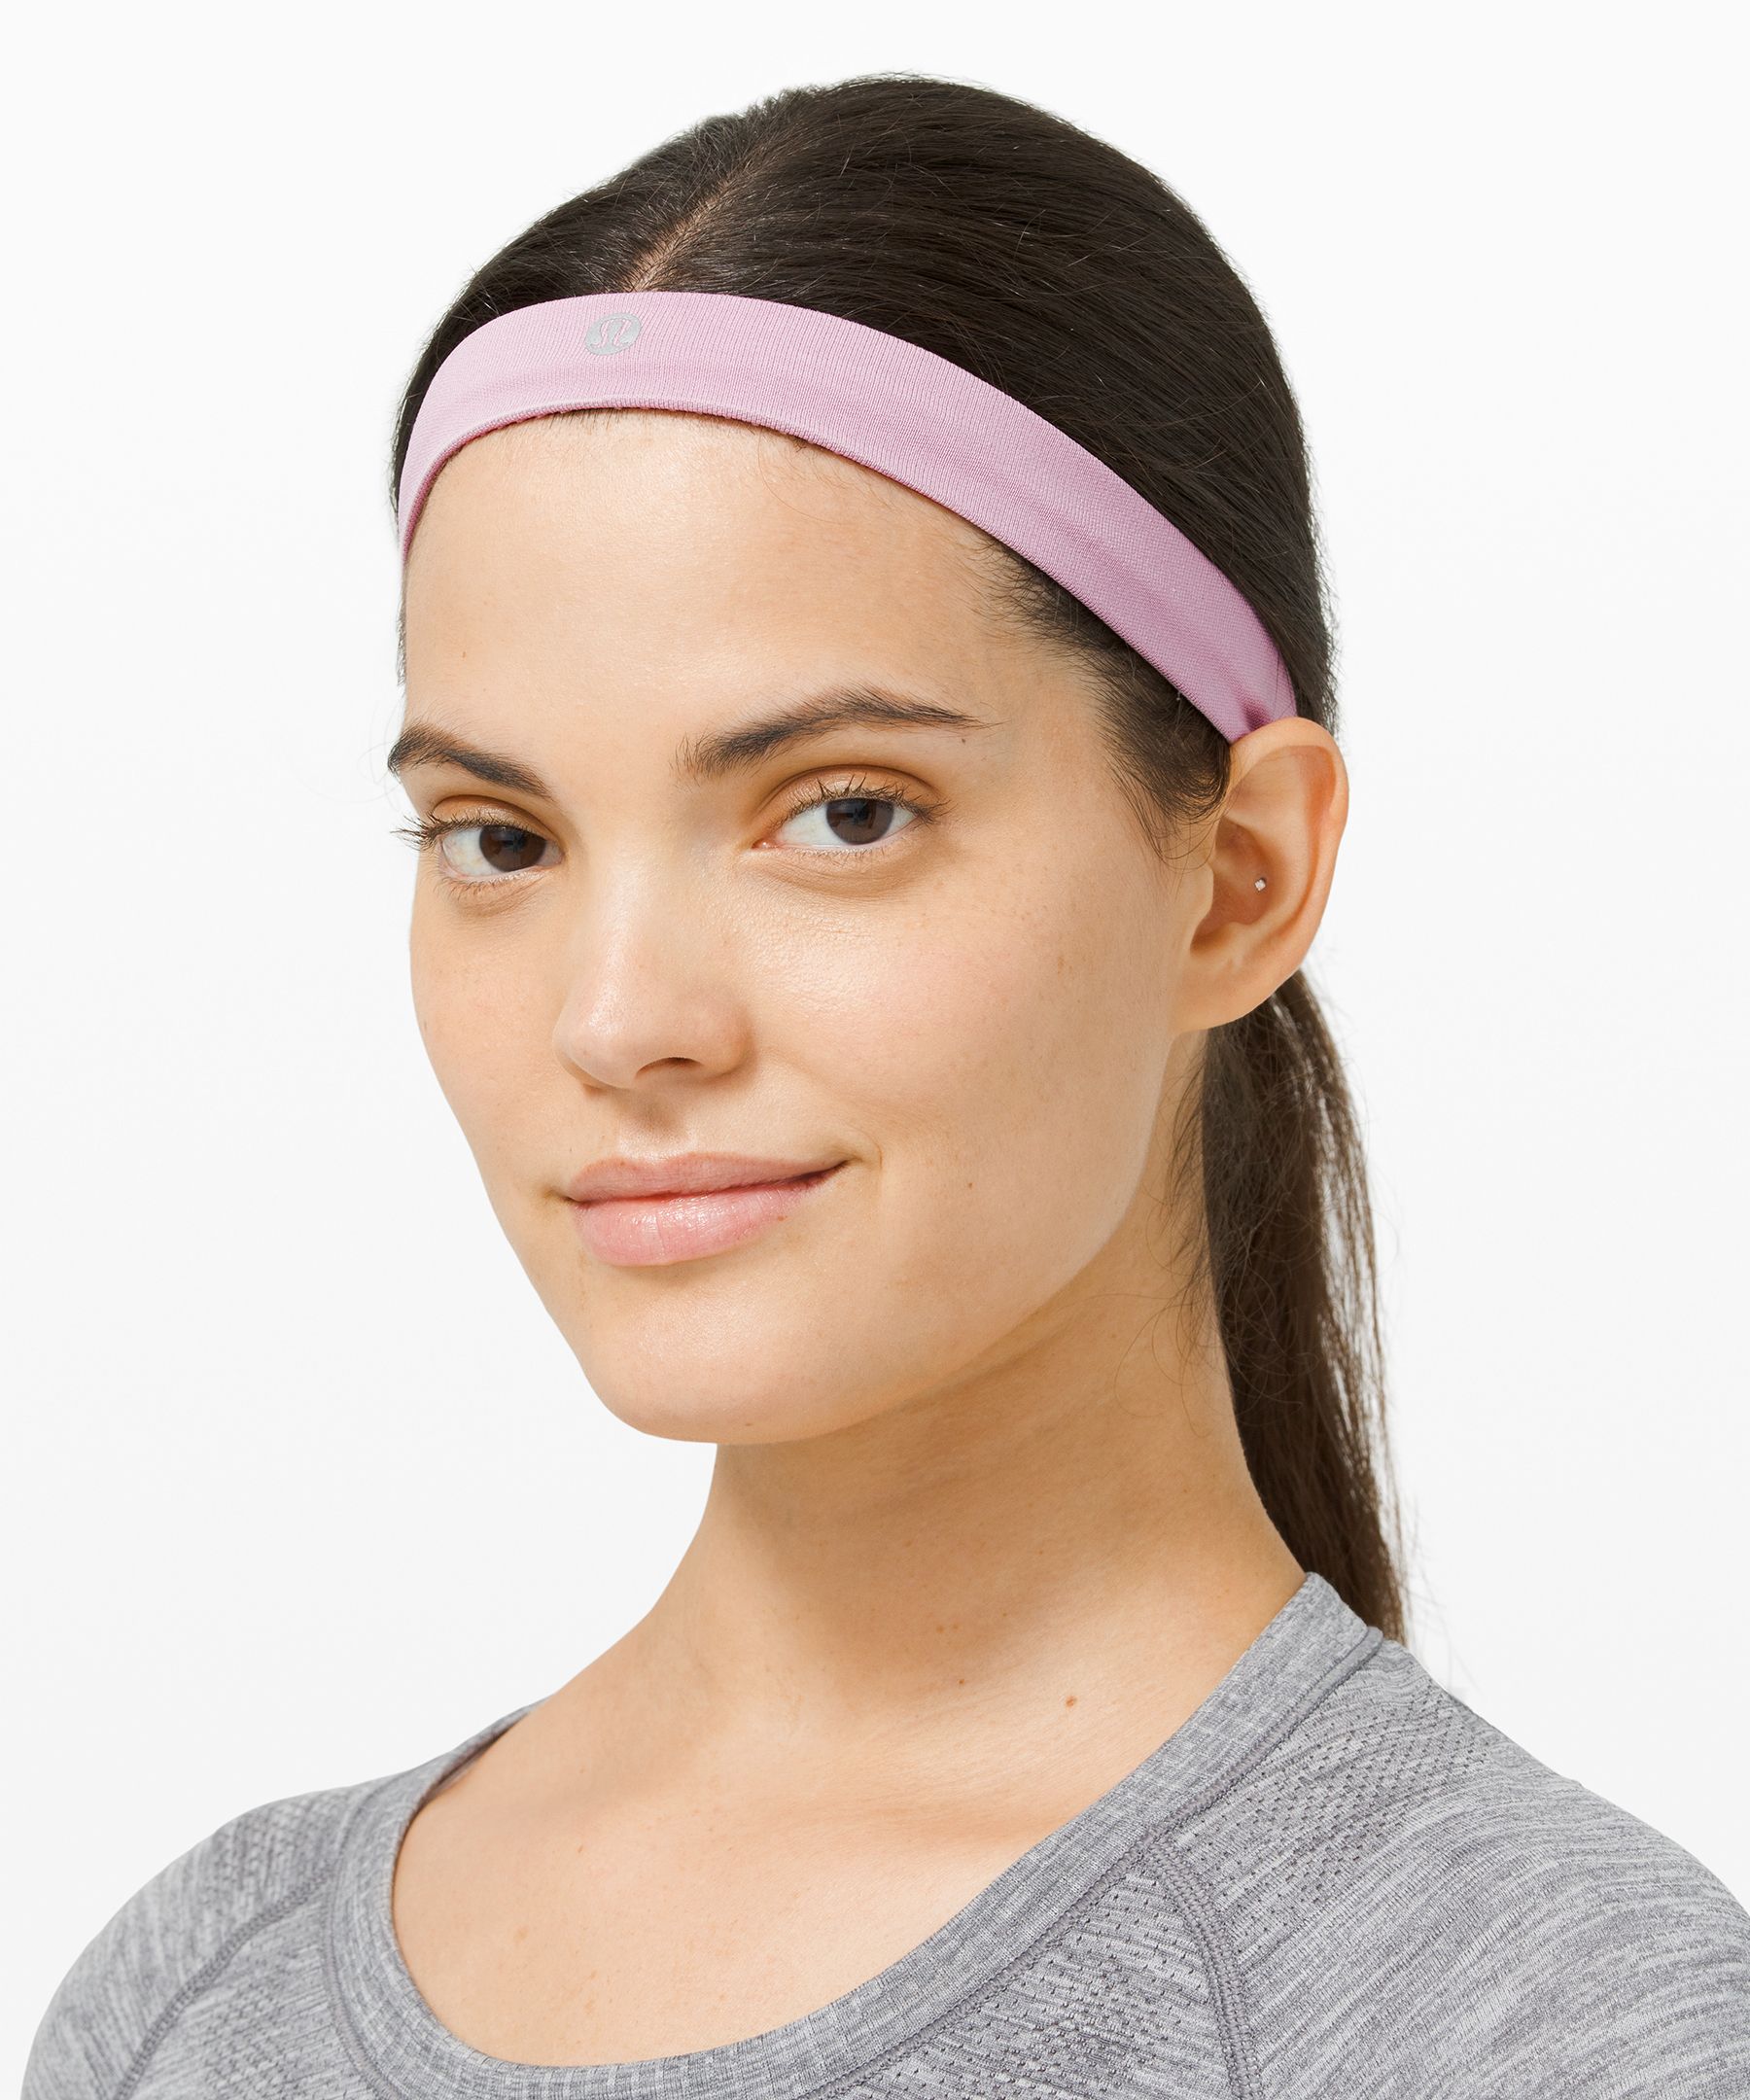 Lululemon Cardio Cross Trainer Headband In Pink